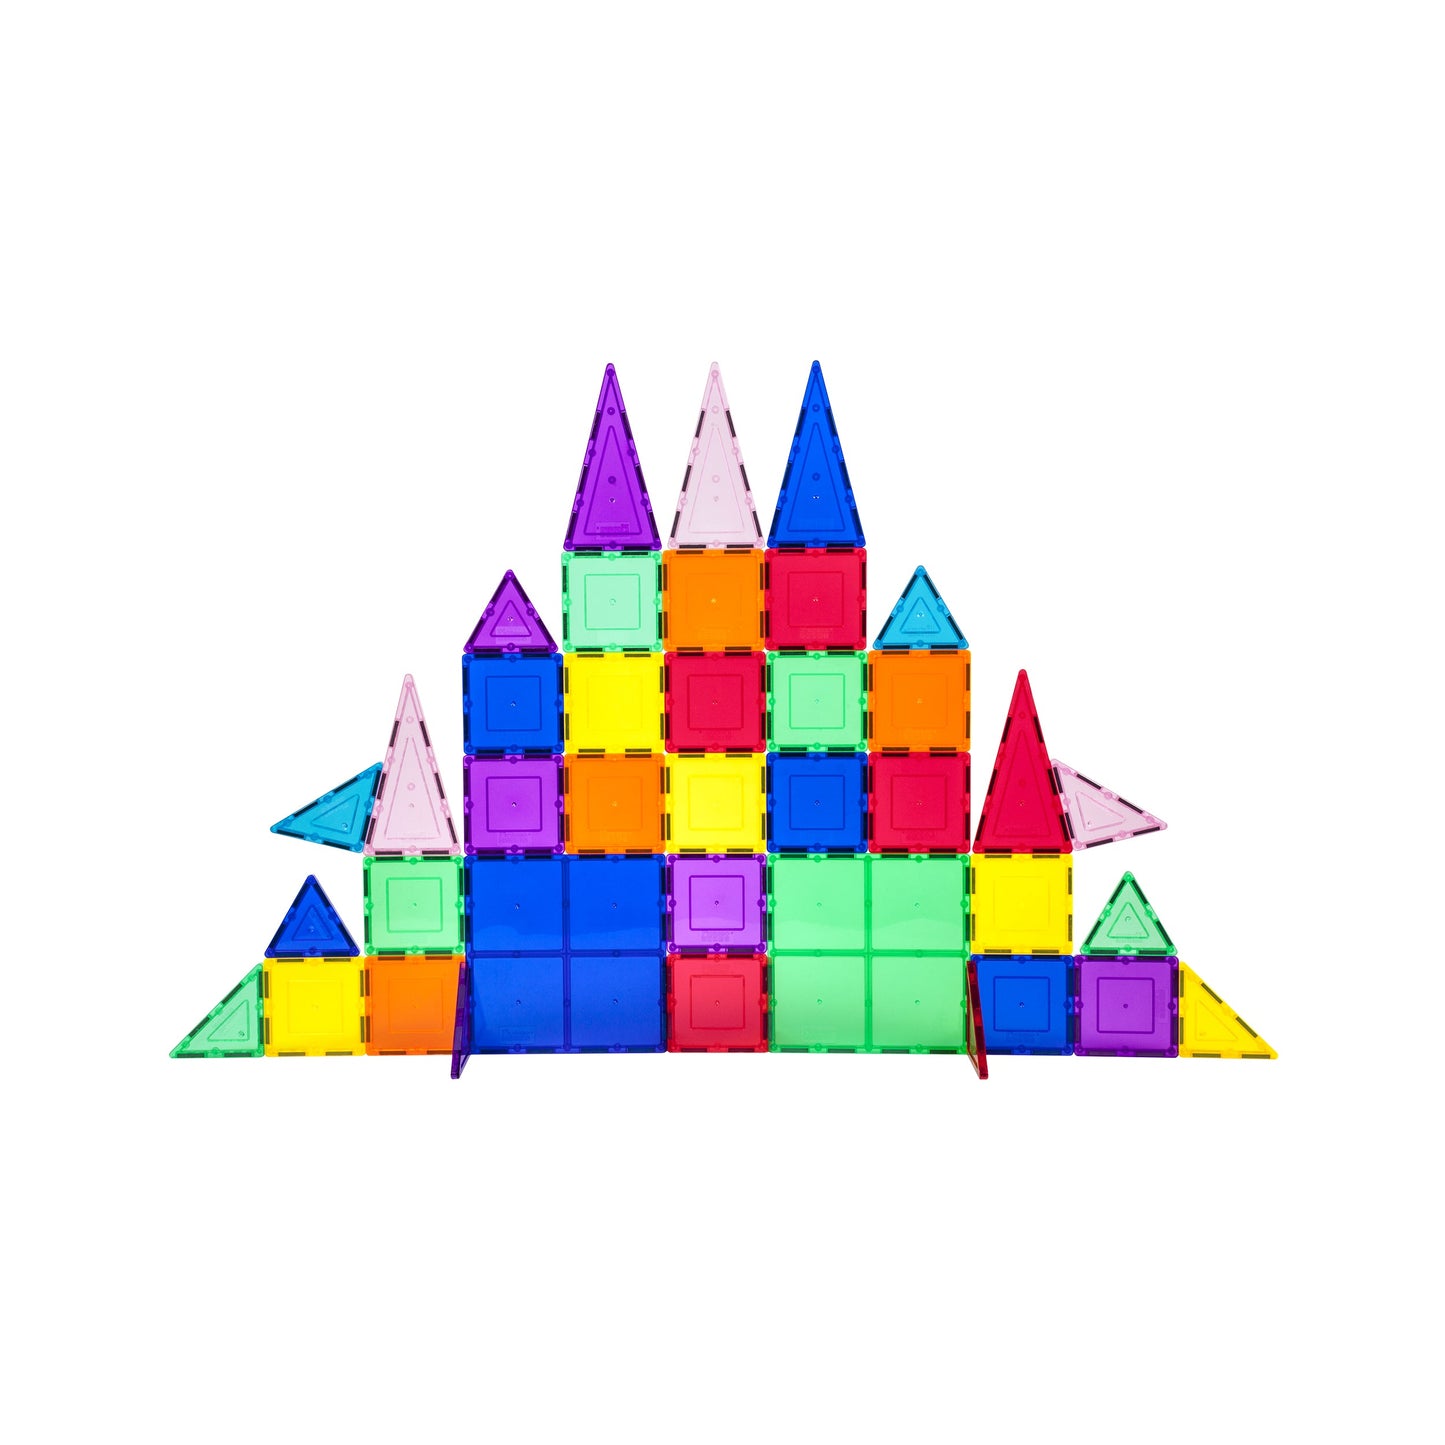 Set PicassoTiles - 61 piese magnetice de construcție colorate